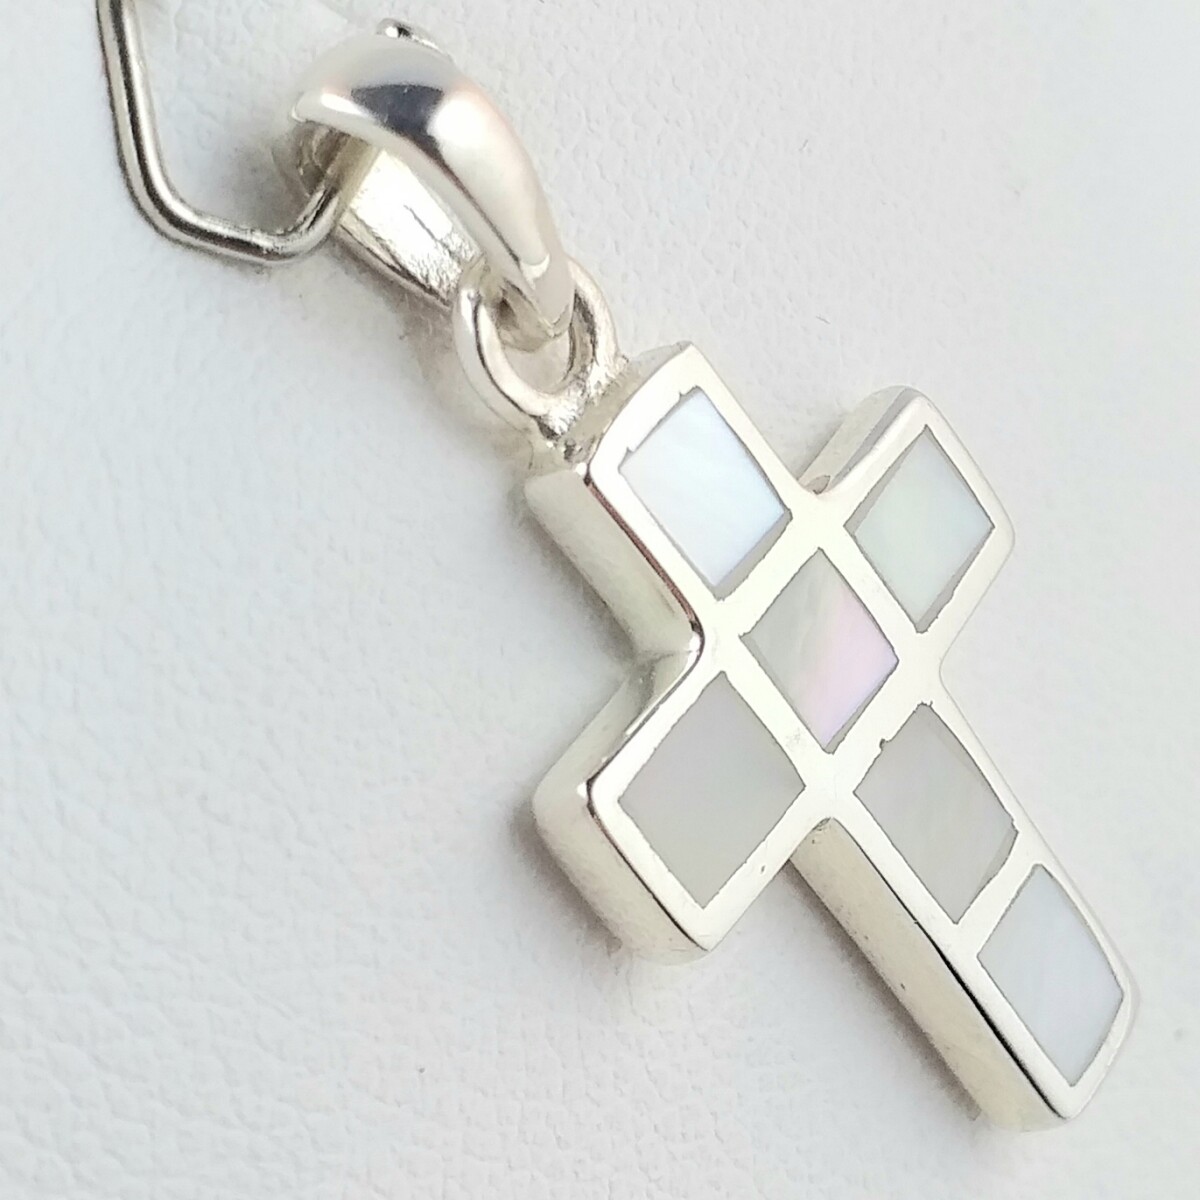 Cruz de plata 925 con Nácar, Medidas largo 2 cm, ancho 1.5 cm, espesor 3 mm. 